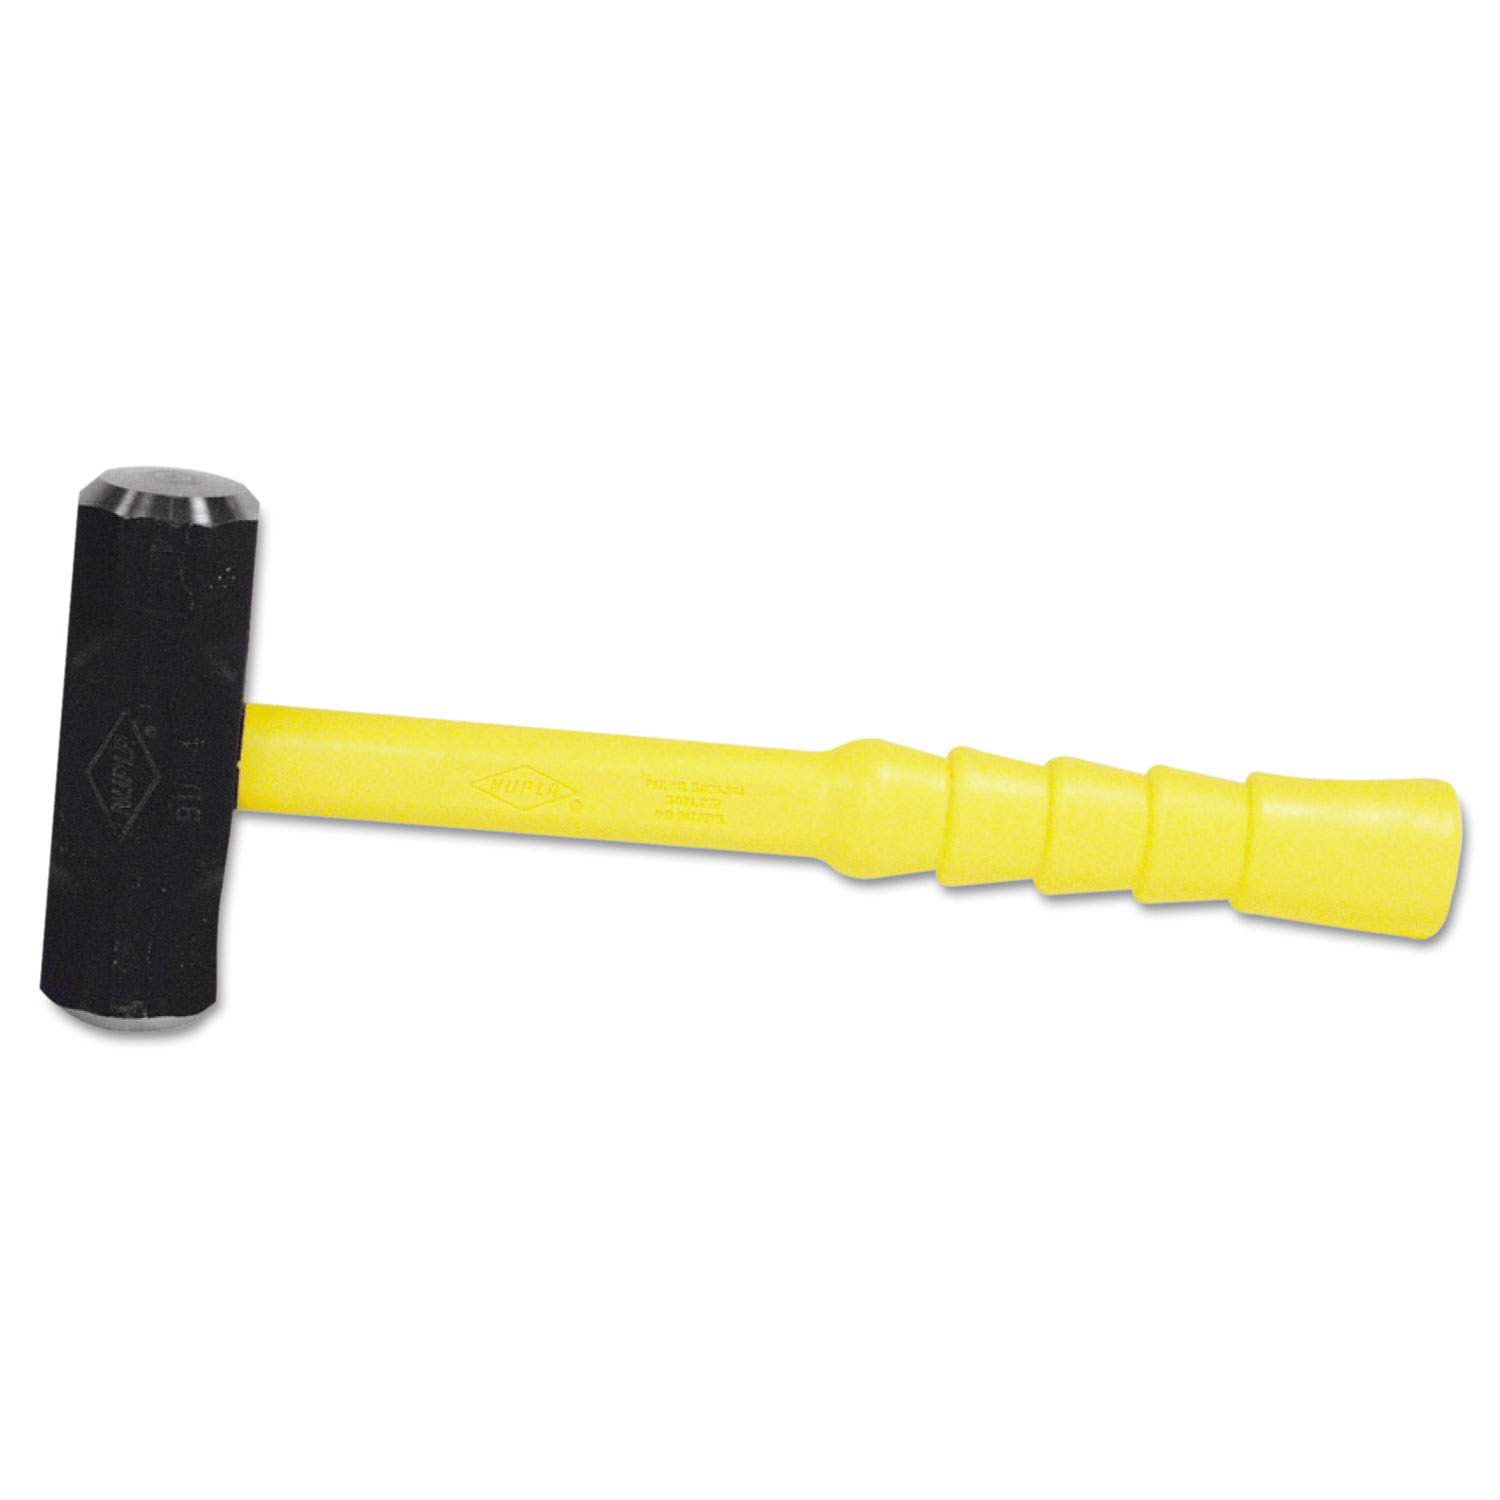 Ergo-Power Slugging Hammer, 6lb, 16 Handle